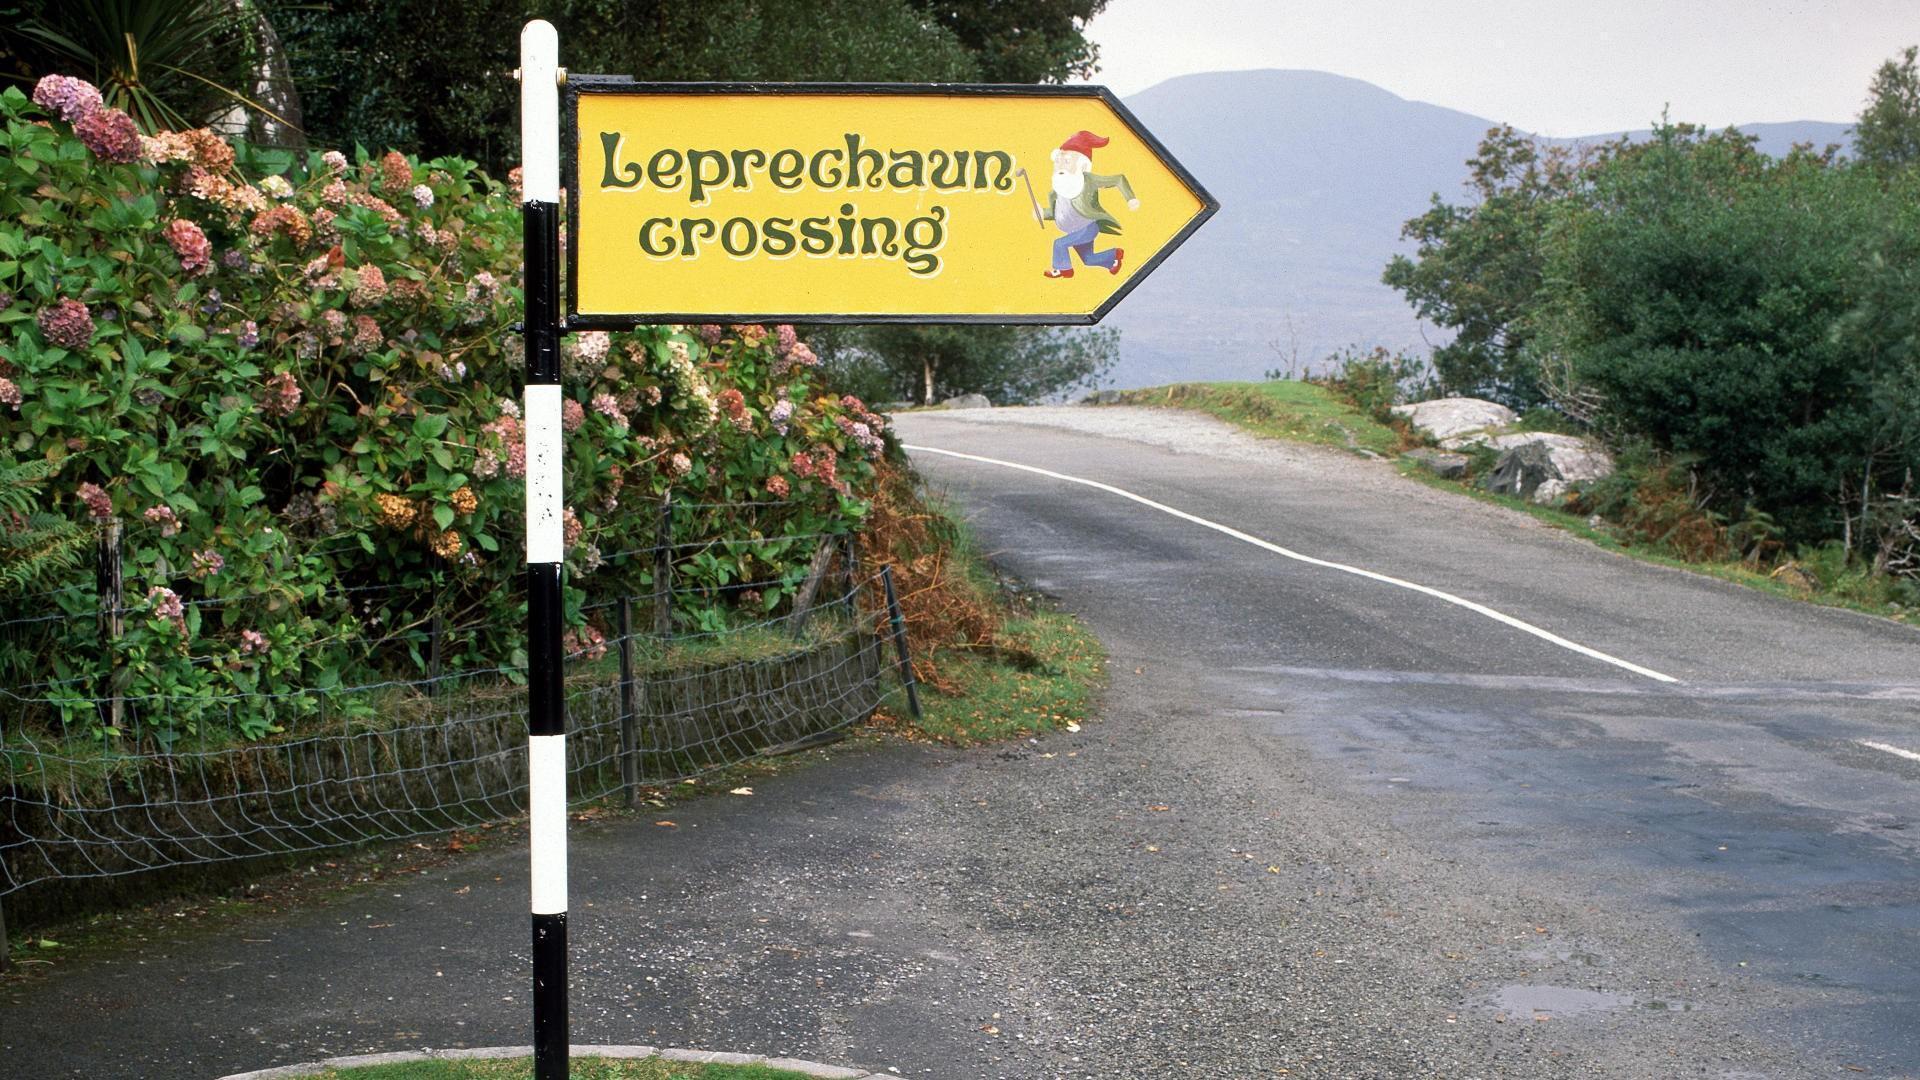 Leprechaun Crossing, Ireland #